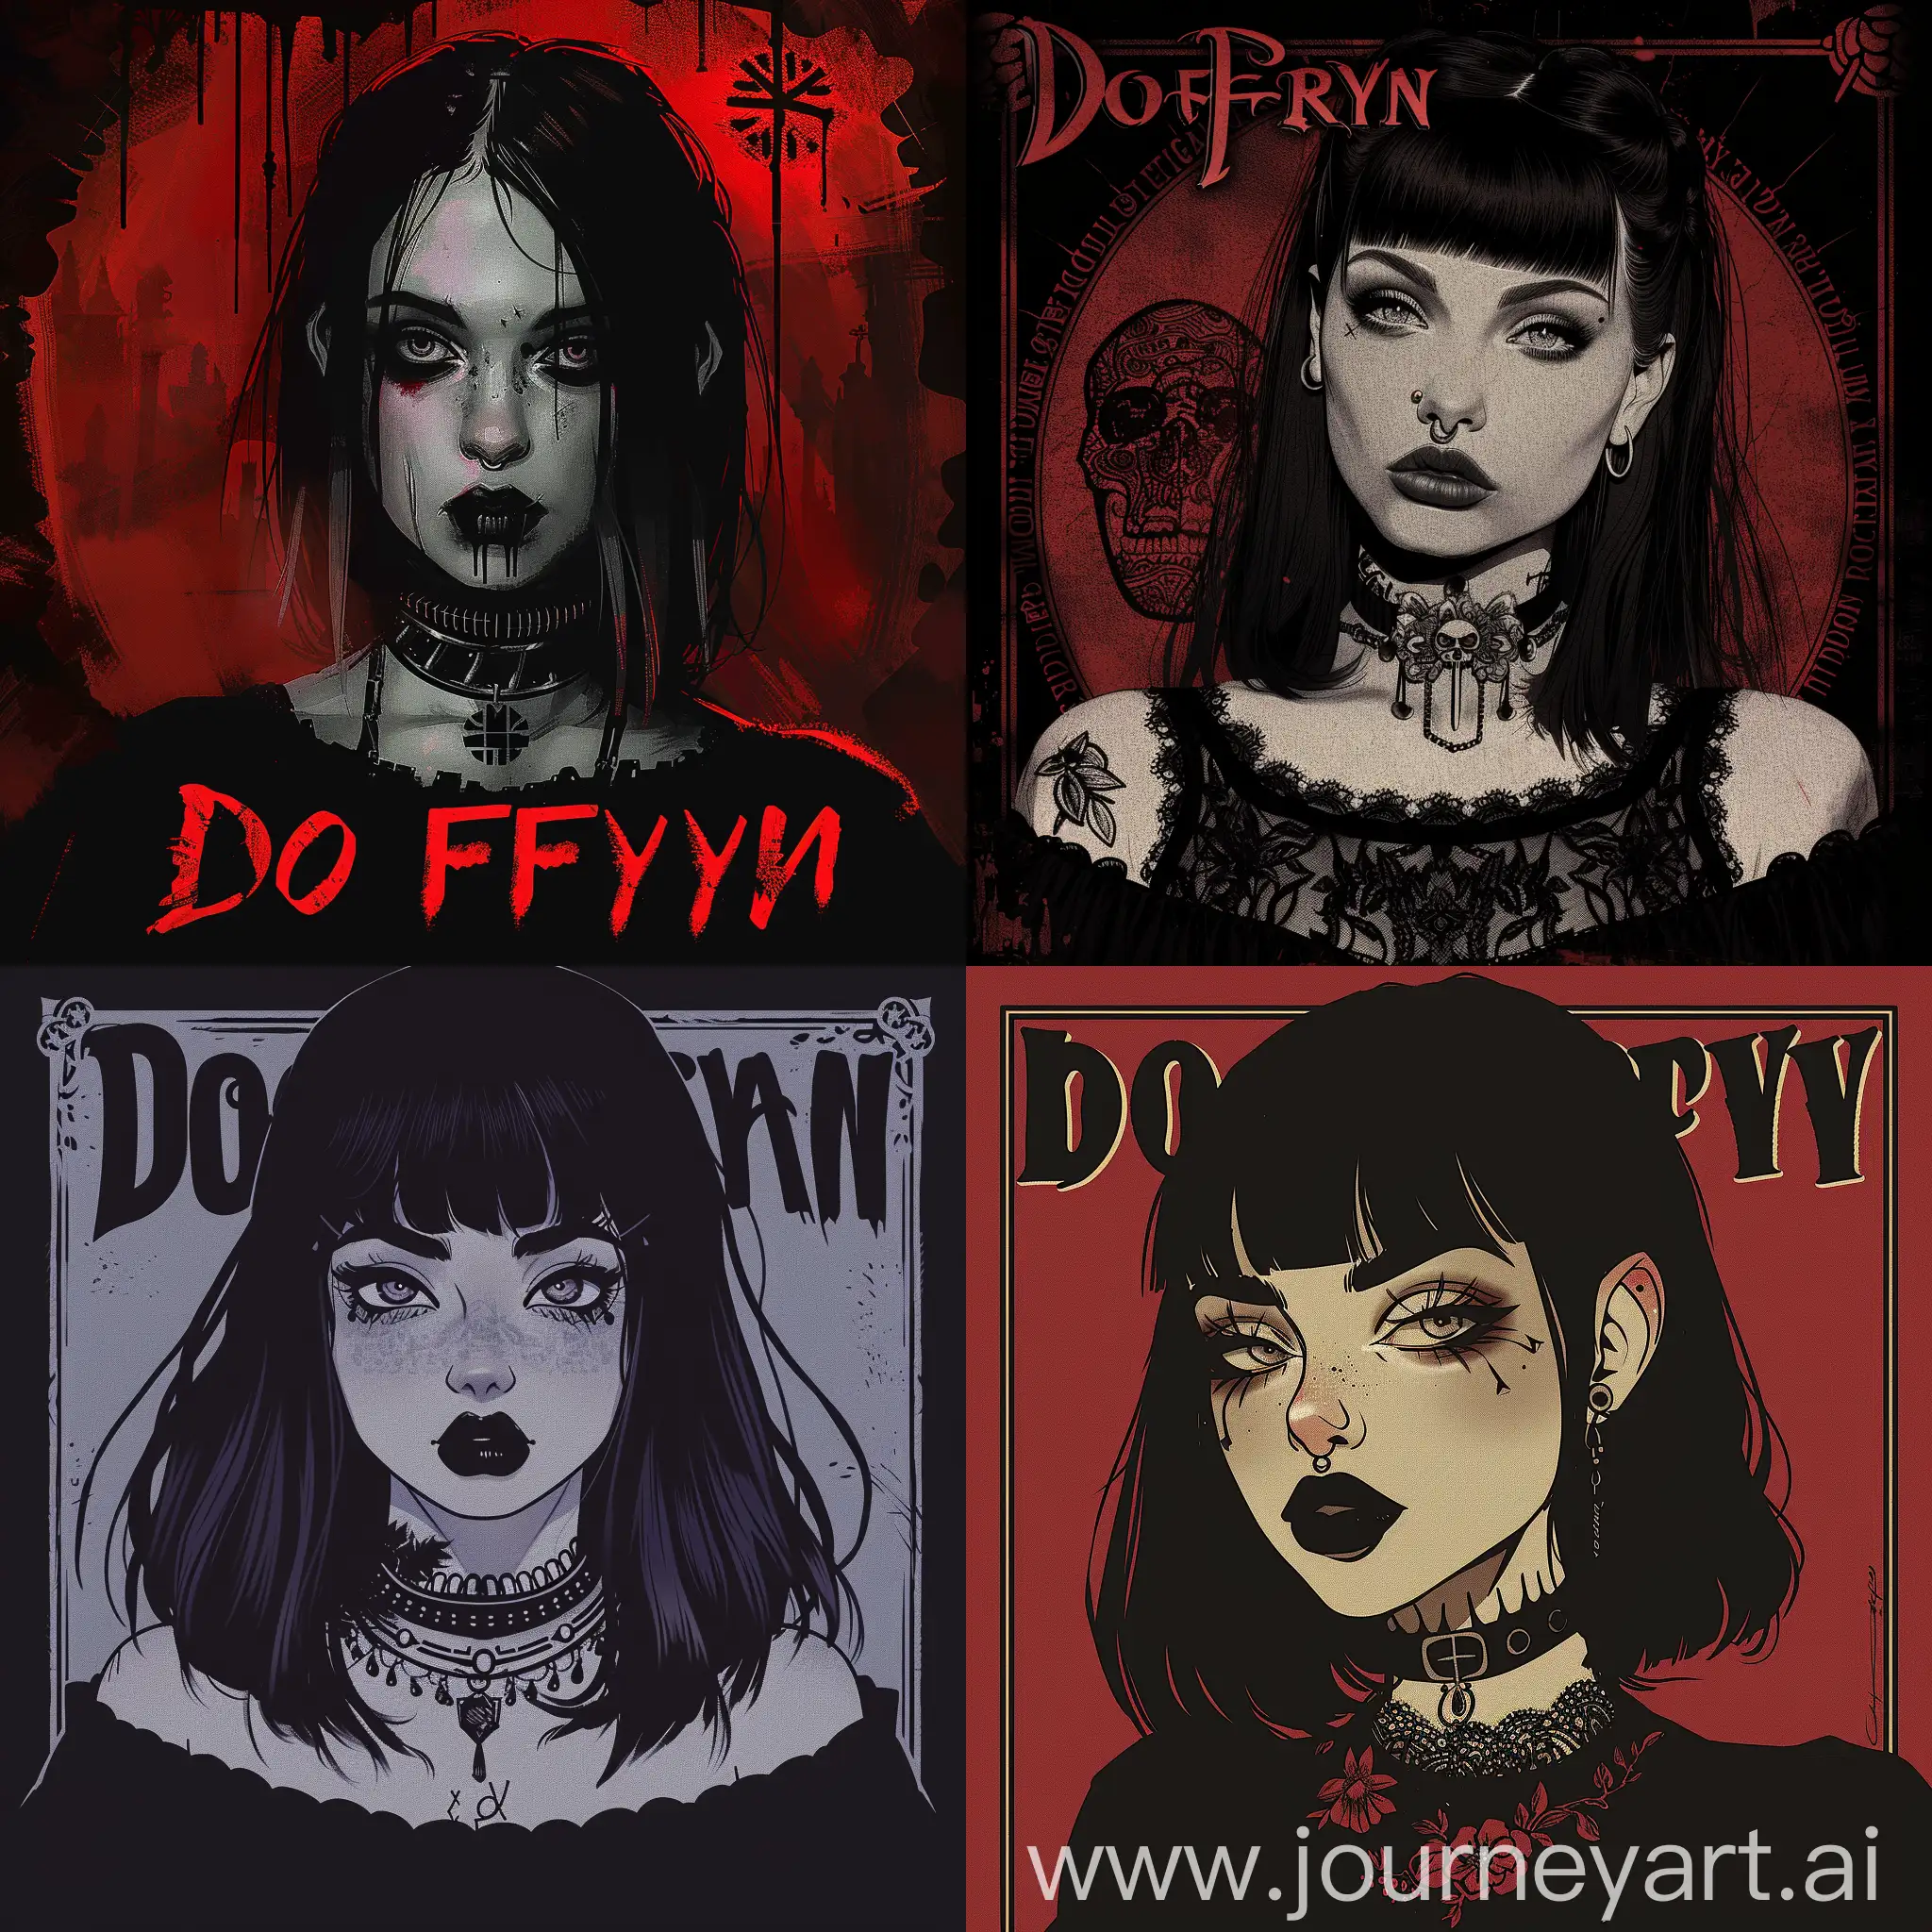 text "DoFFryan", goth style